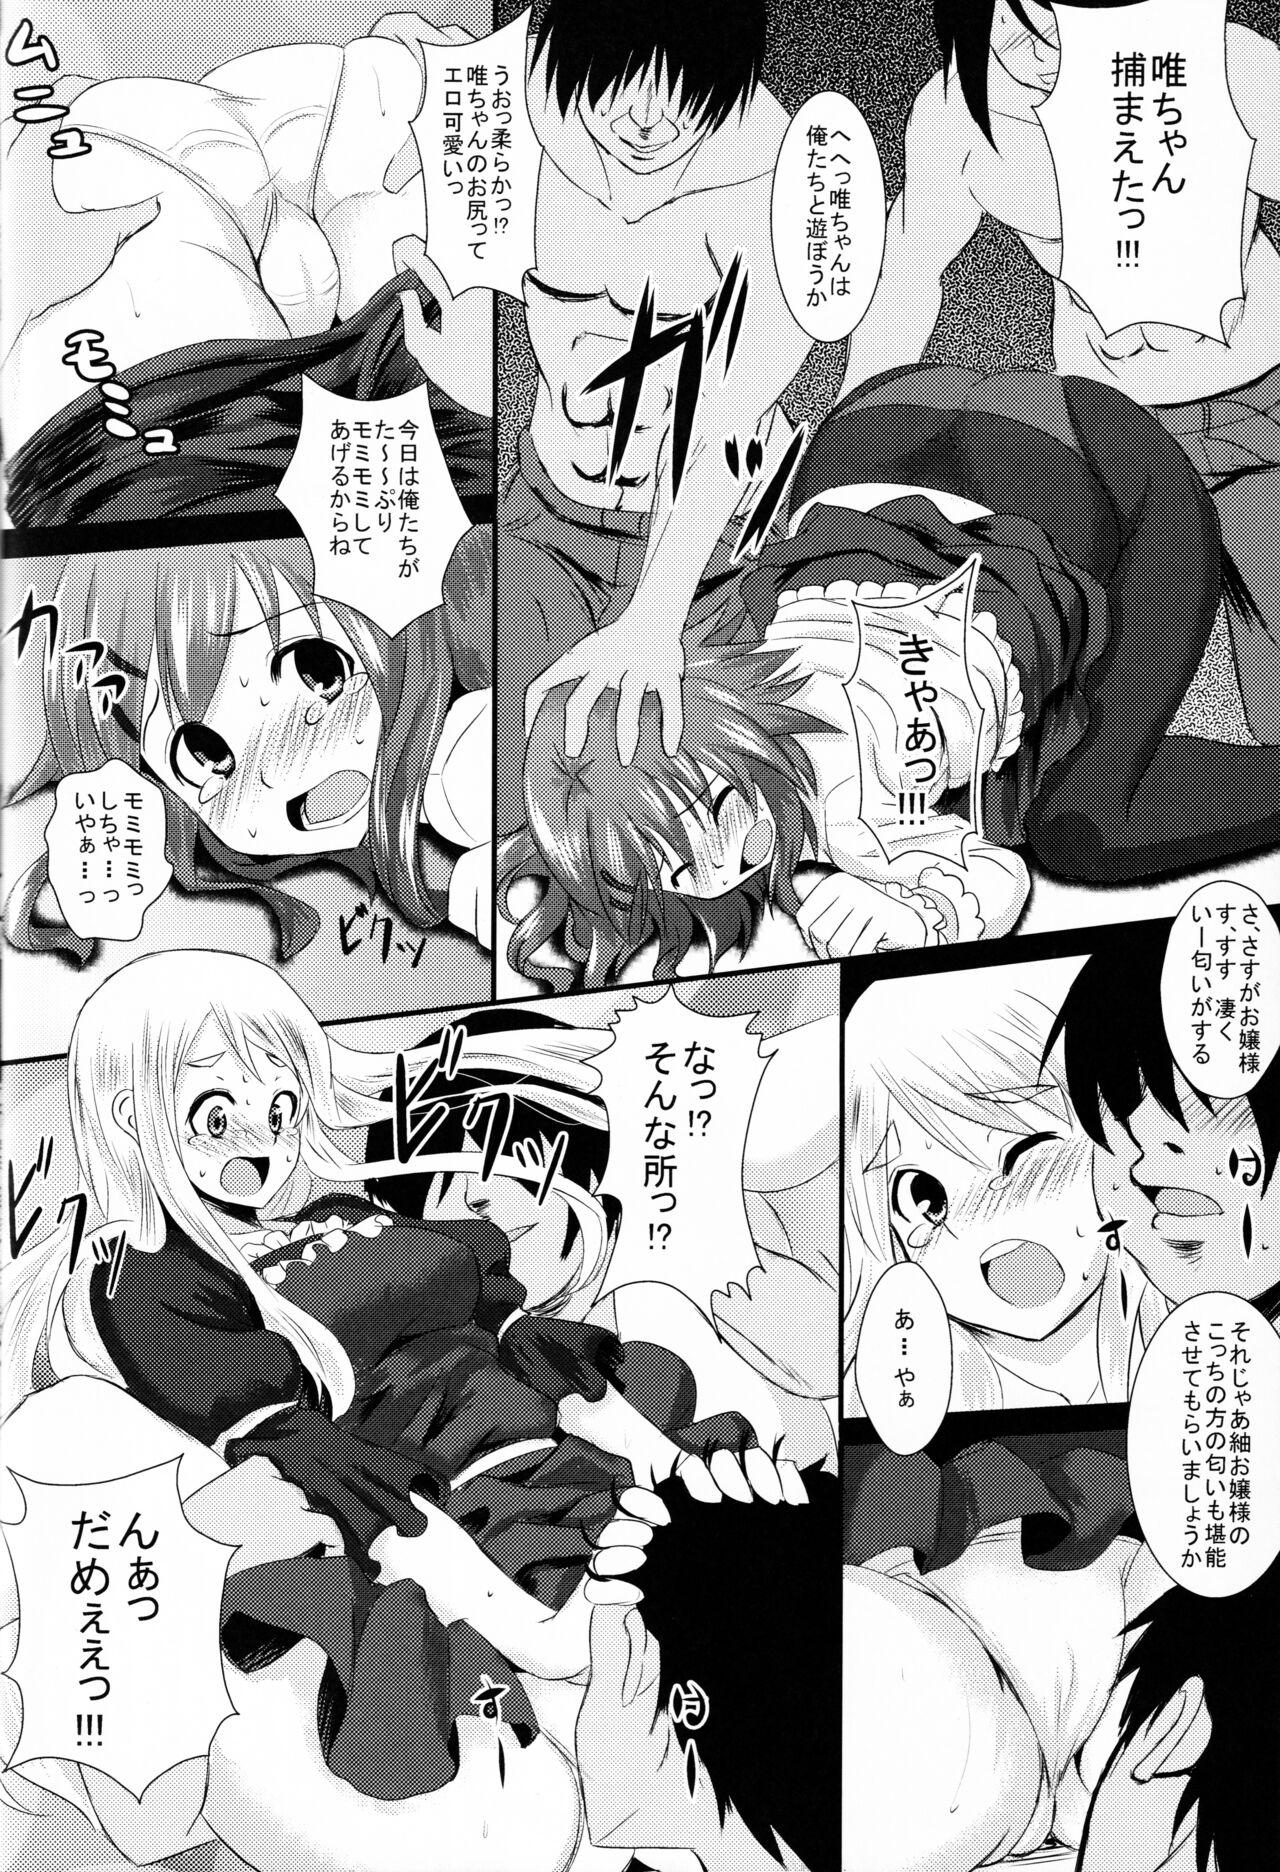 Office KKK - K on Futanari - Page 11